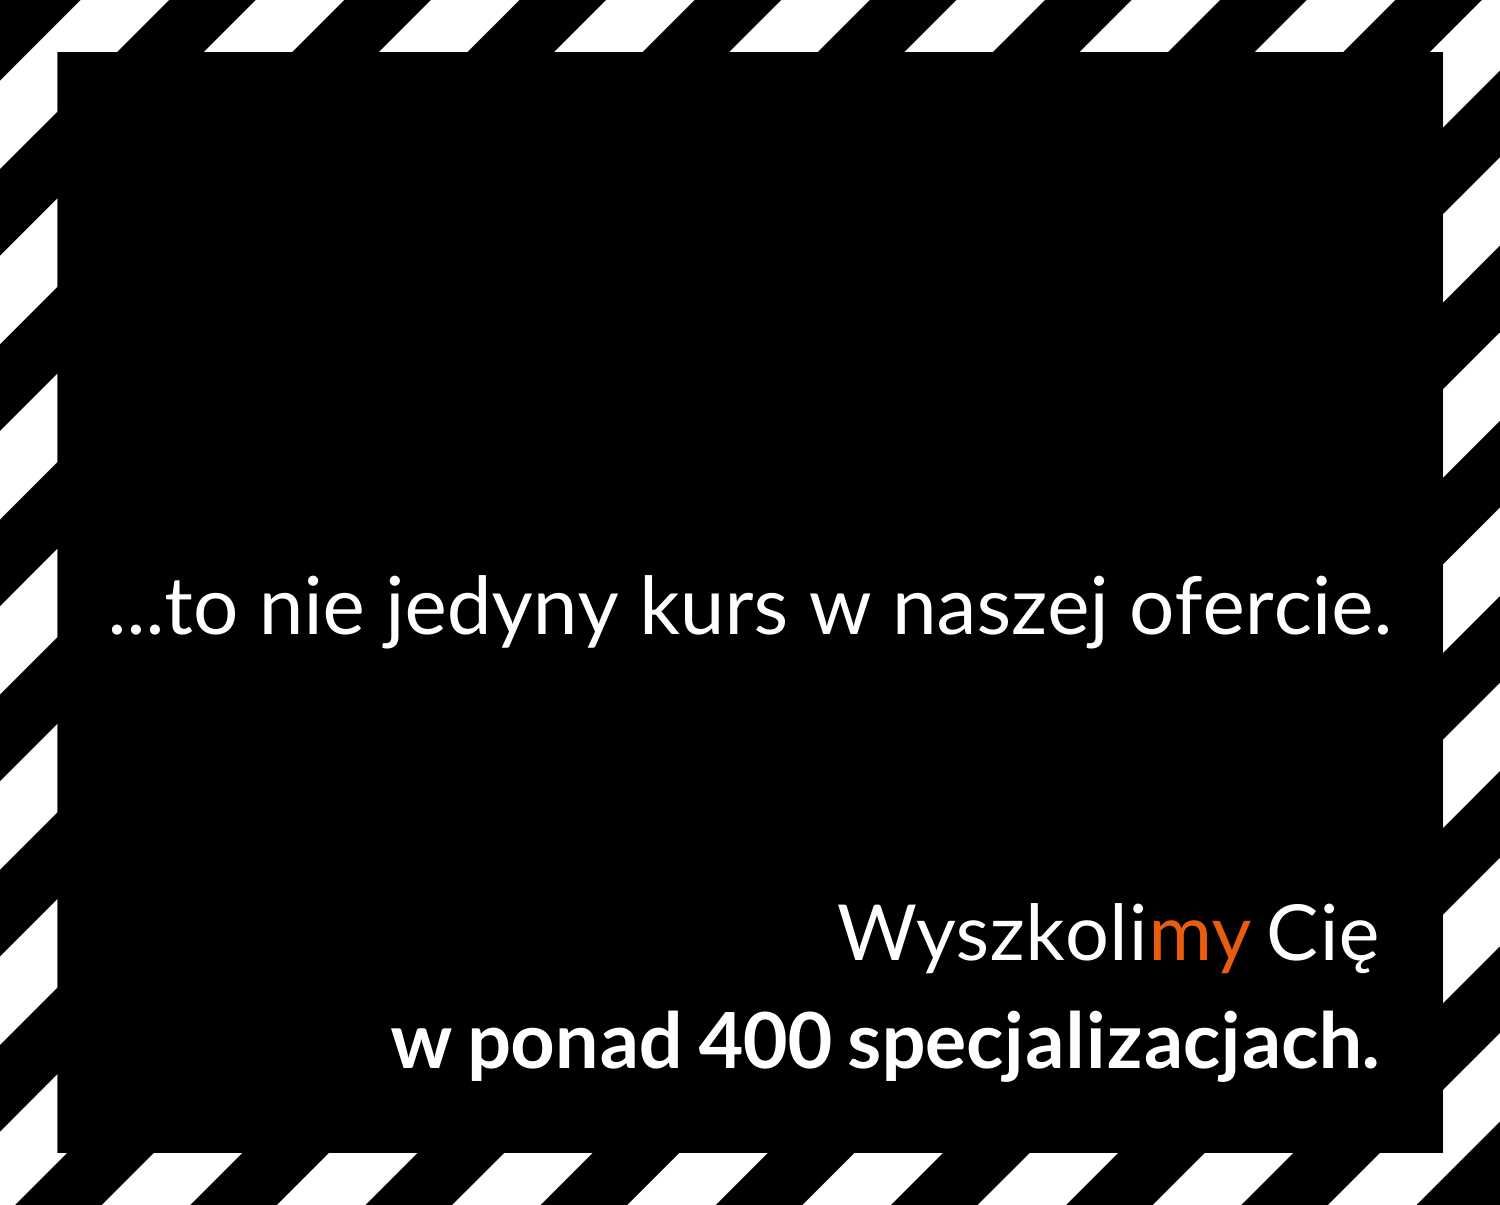 ⊷ Kurs Operatora Maszyn ⊷ Koparka Koparkoładowarka ⊷ Ładowarka Kraków